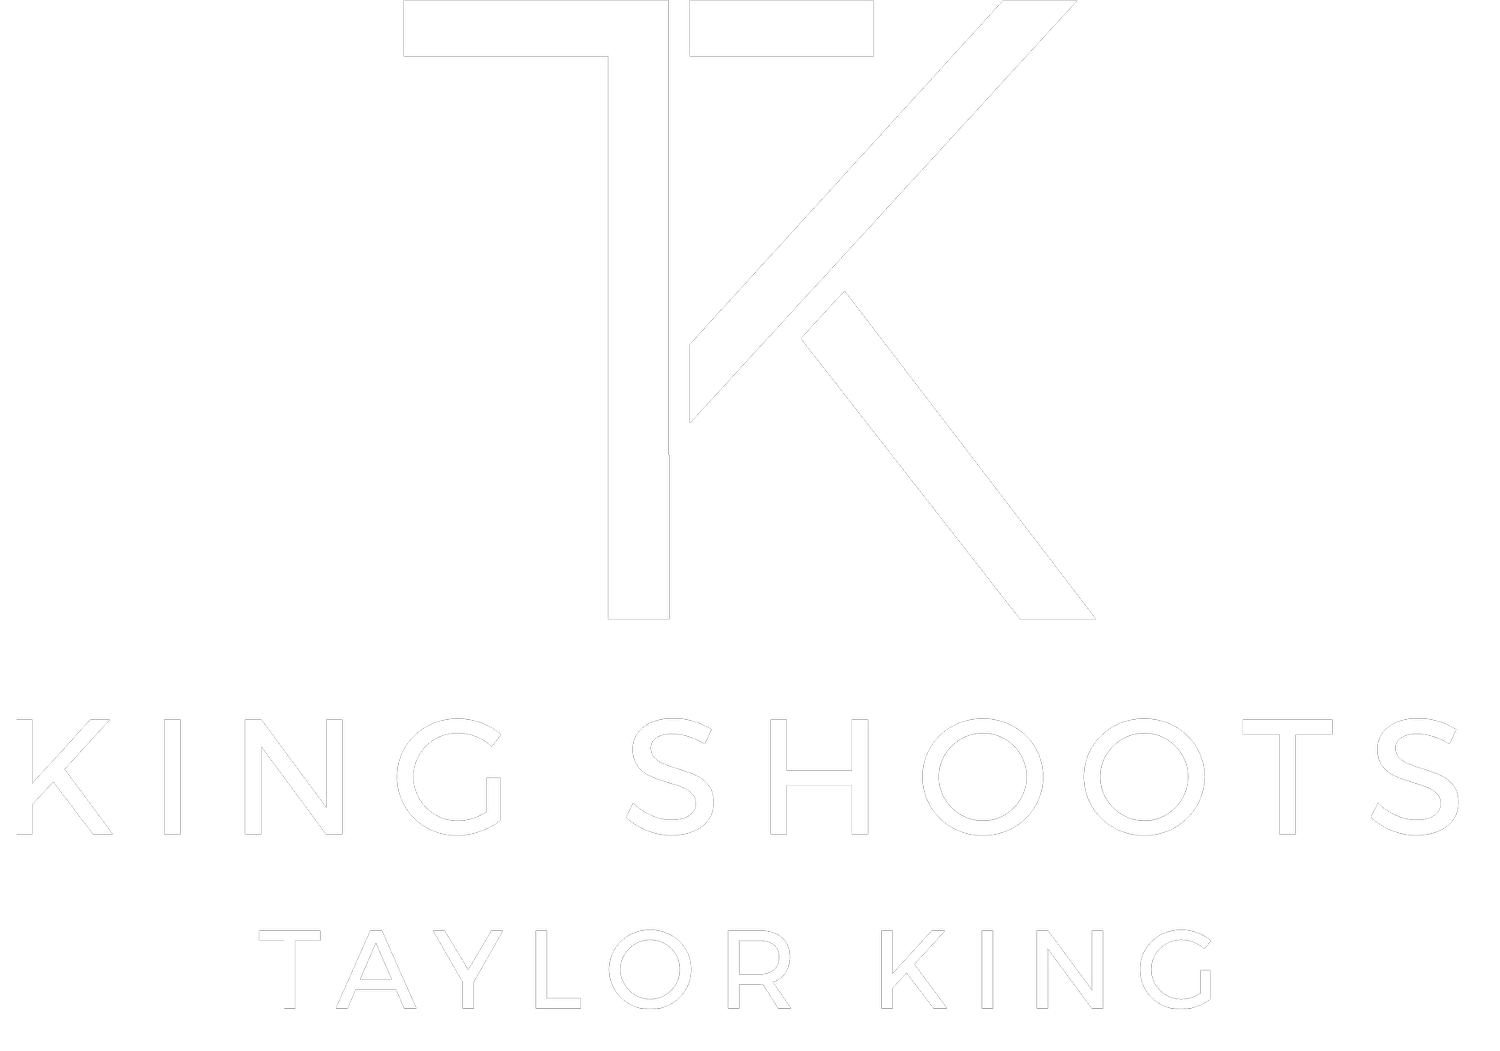 King Shoots